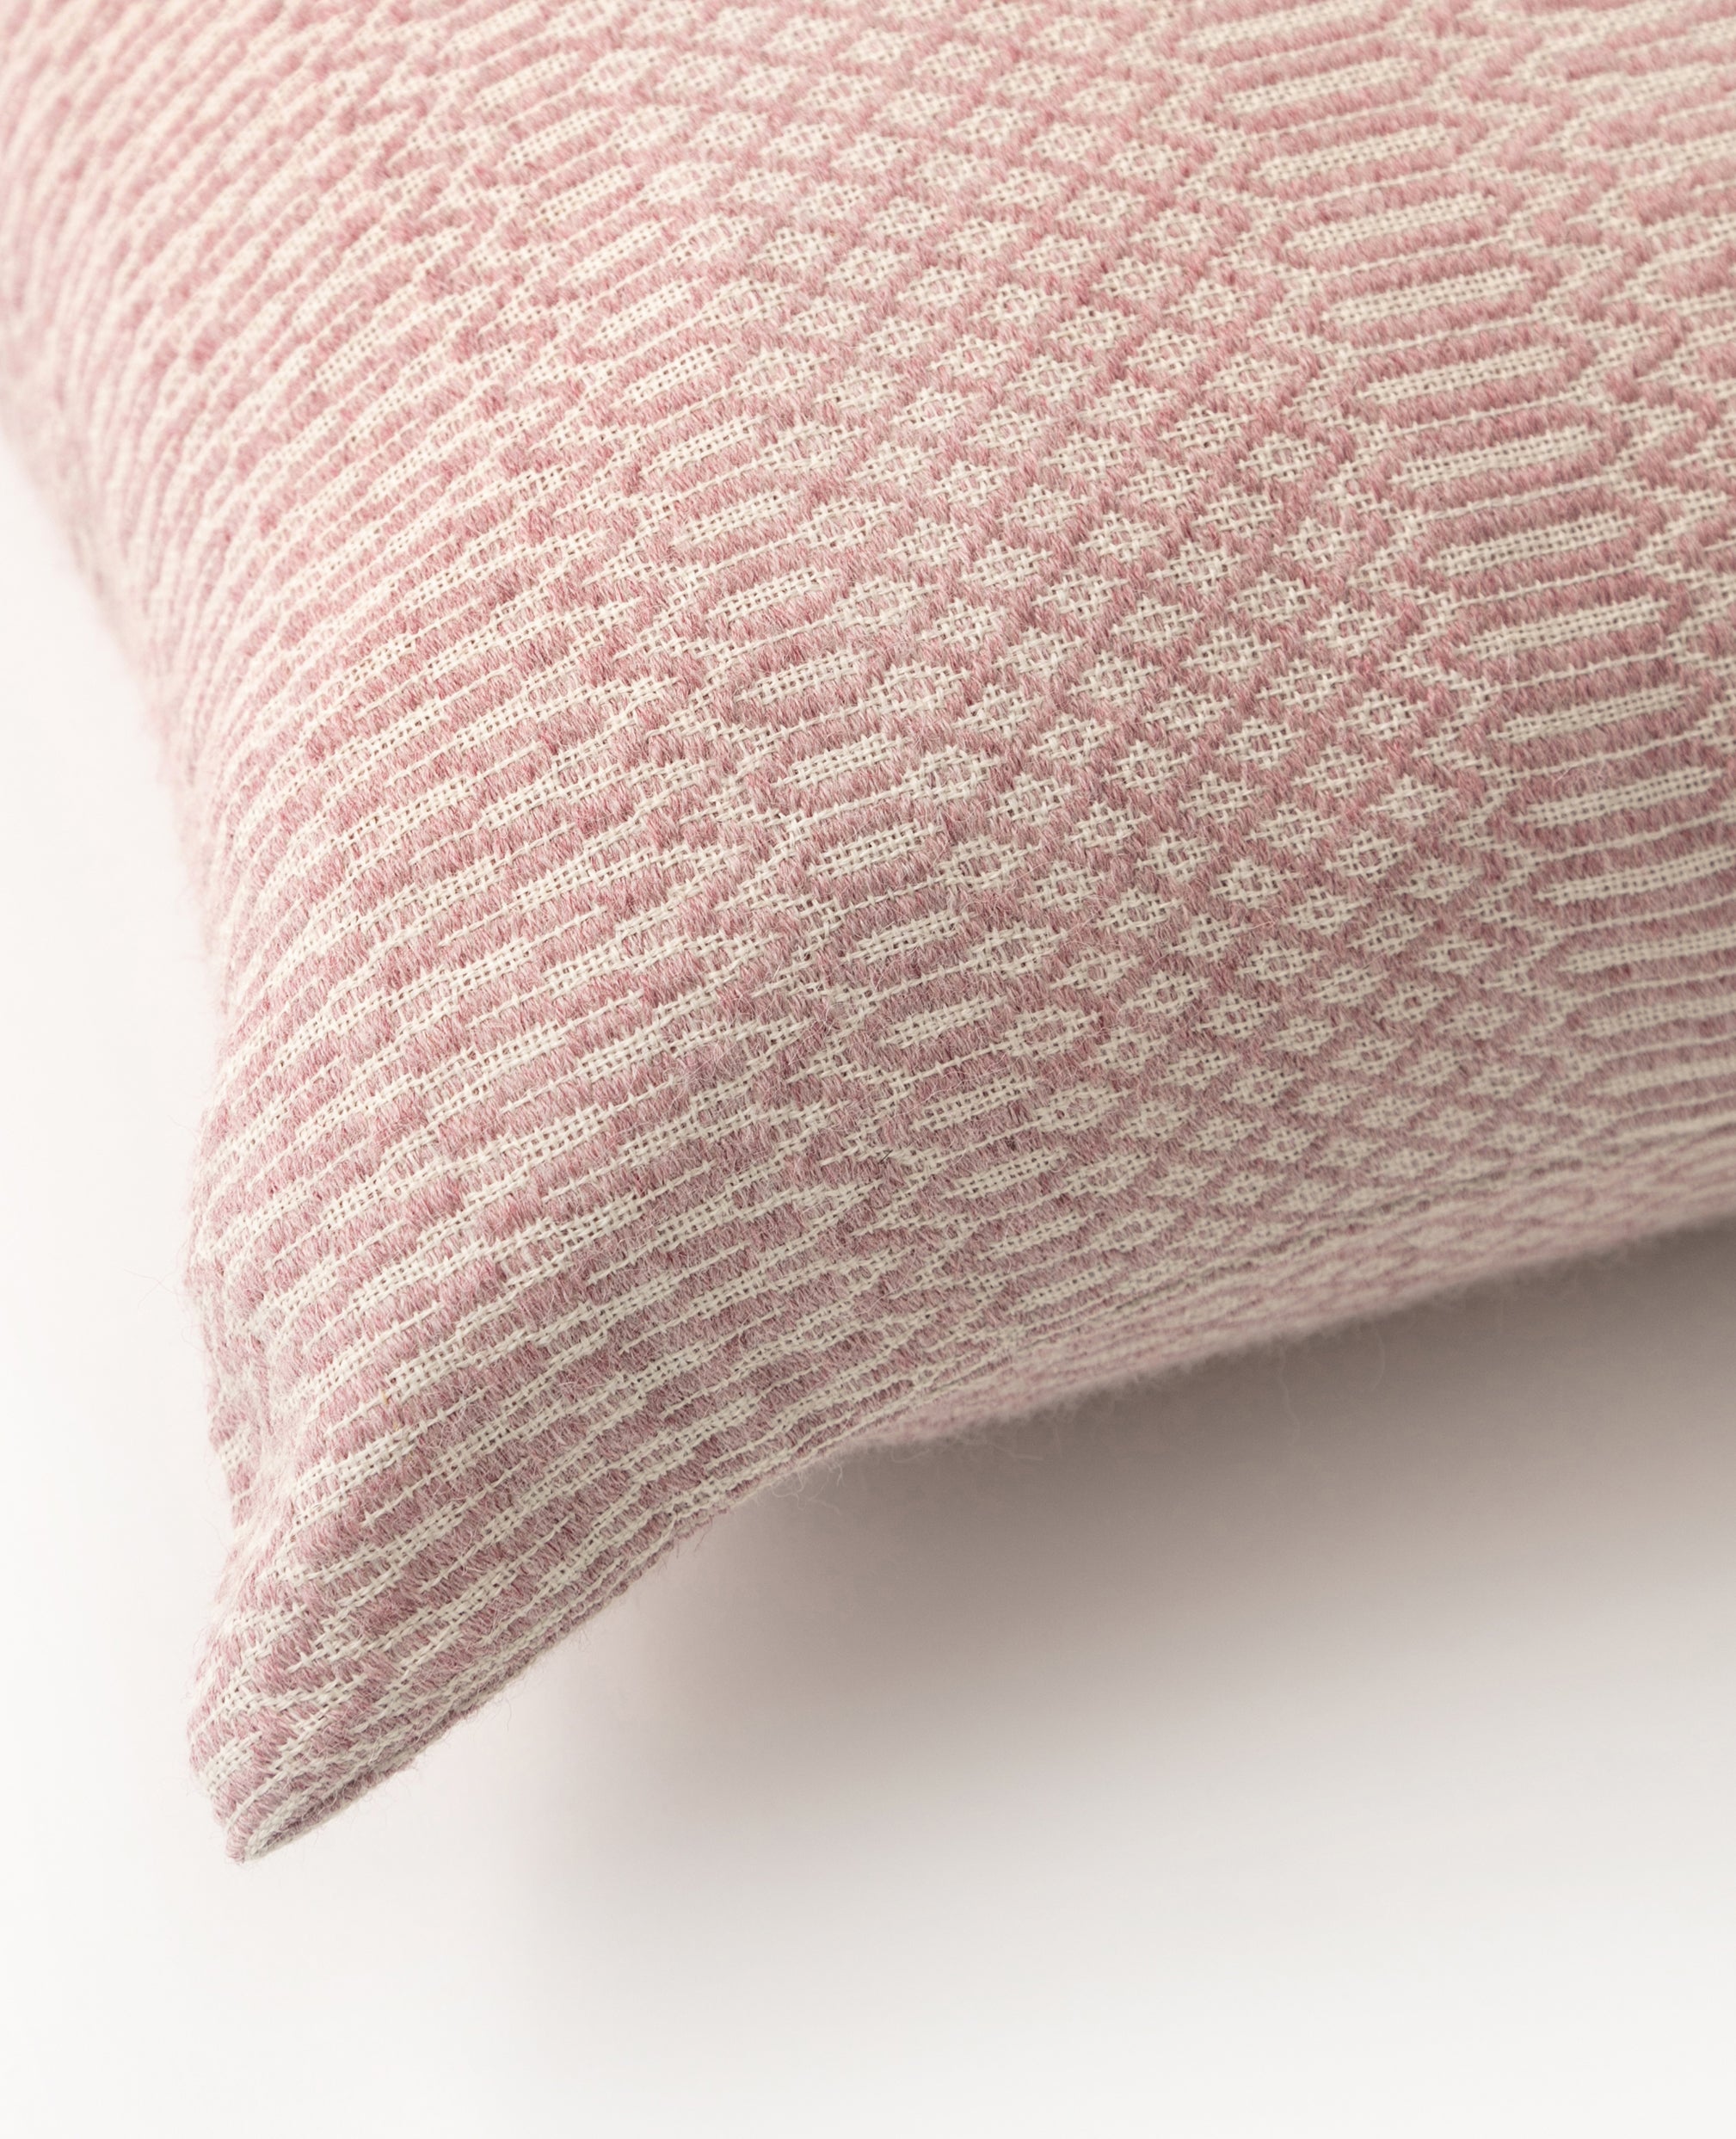 Siana overshot cushion detail